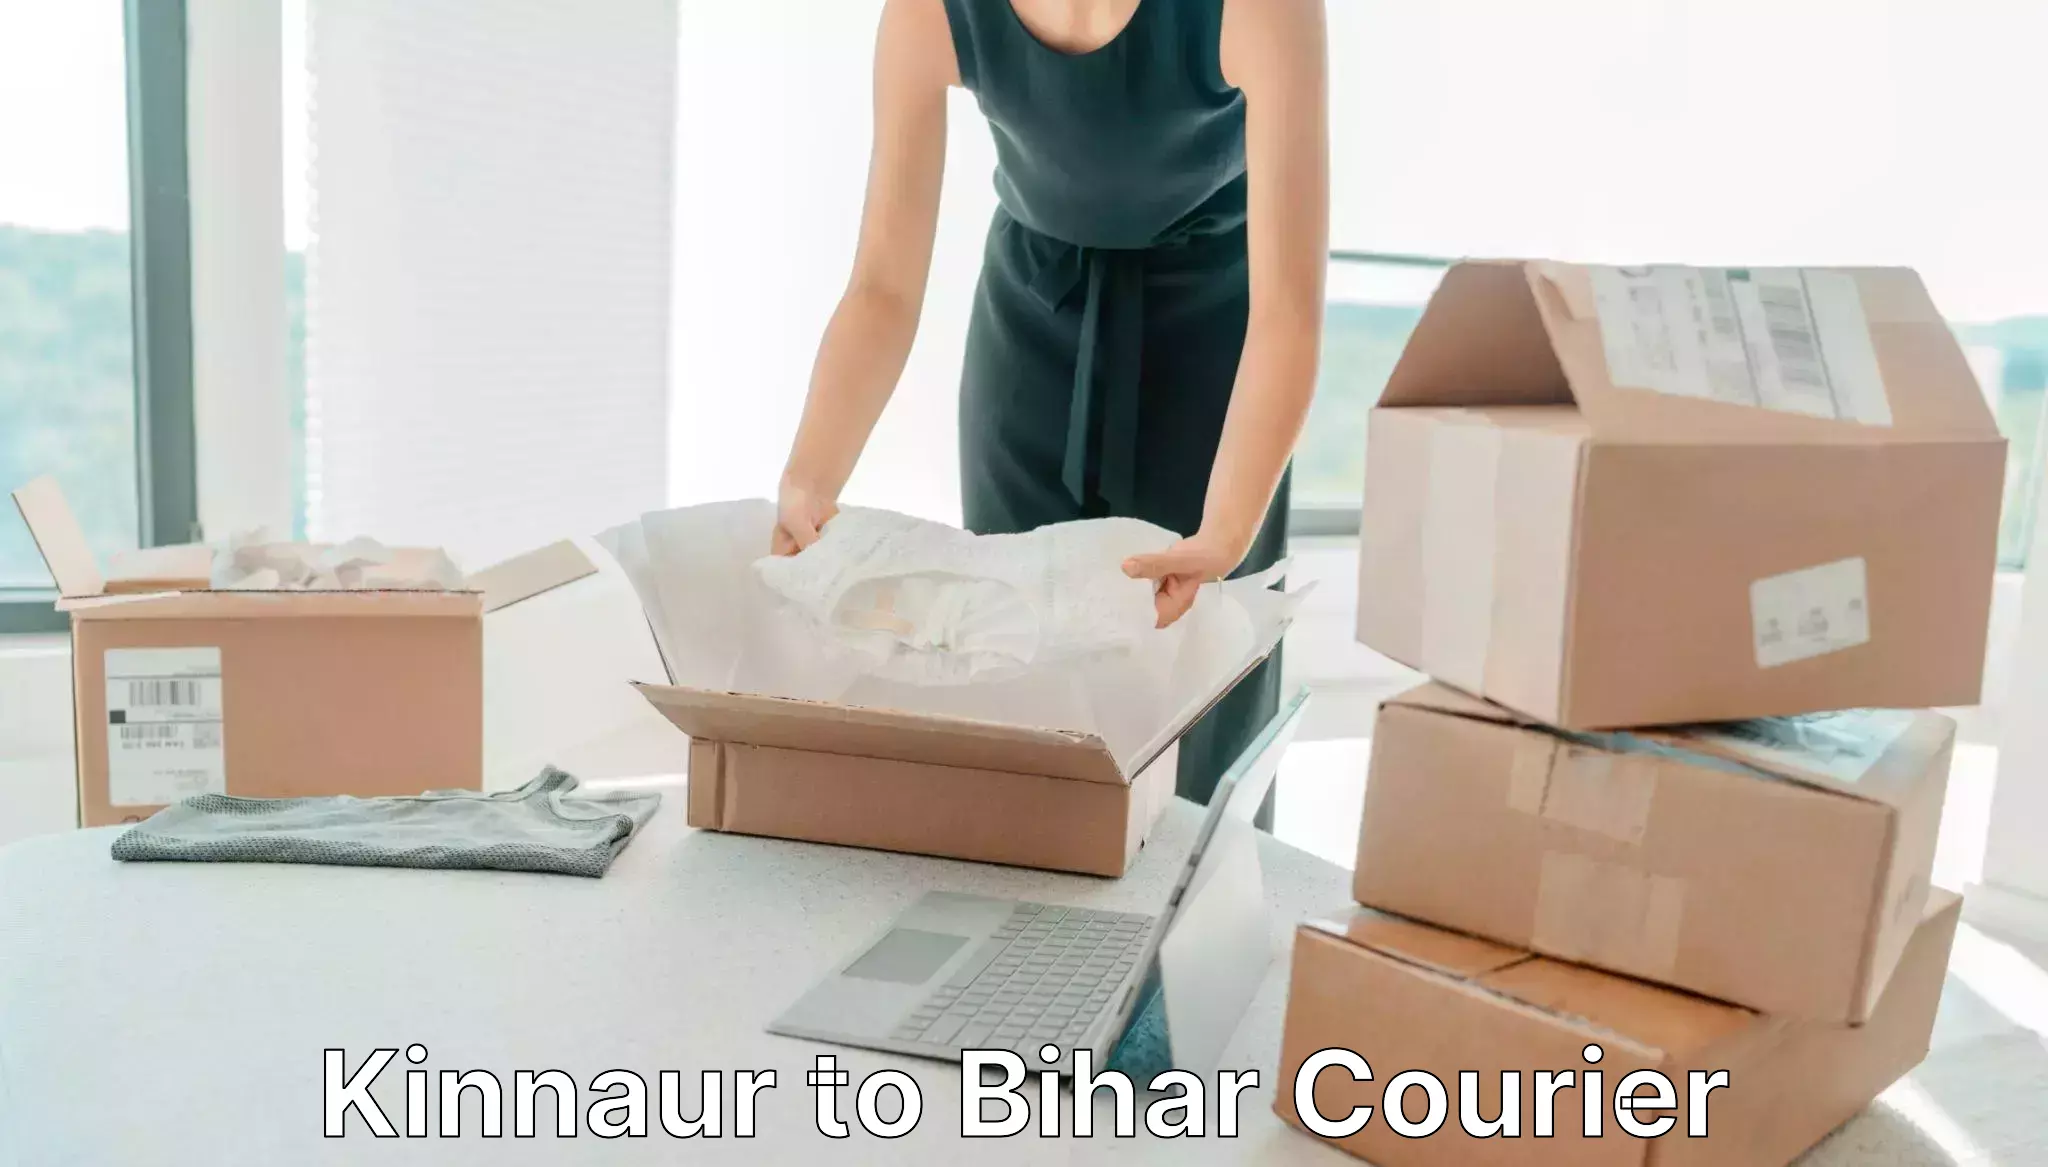 Courier service comparison Kinnaur to Dinara